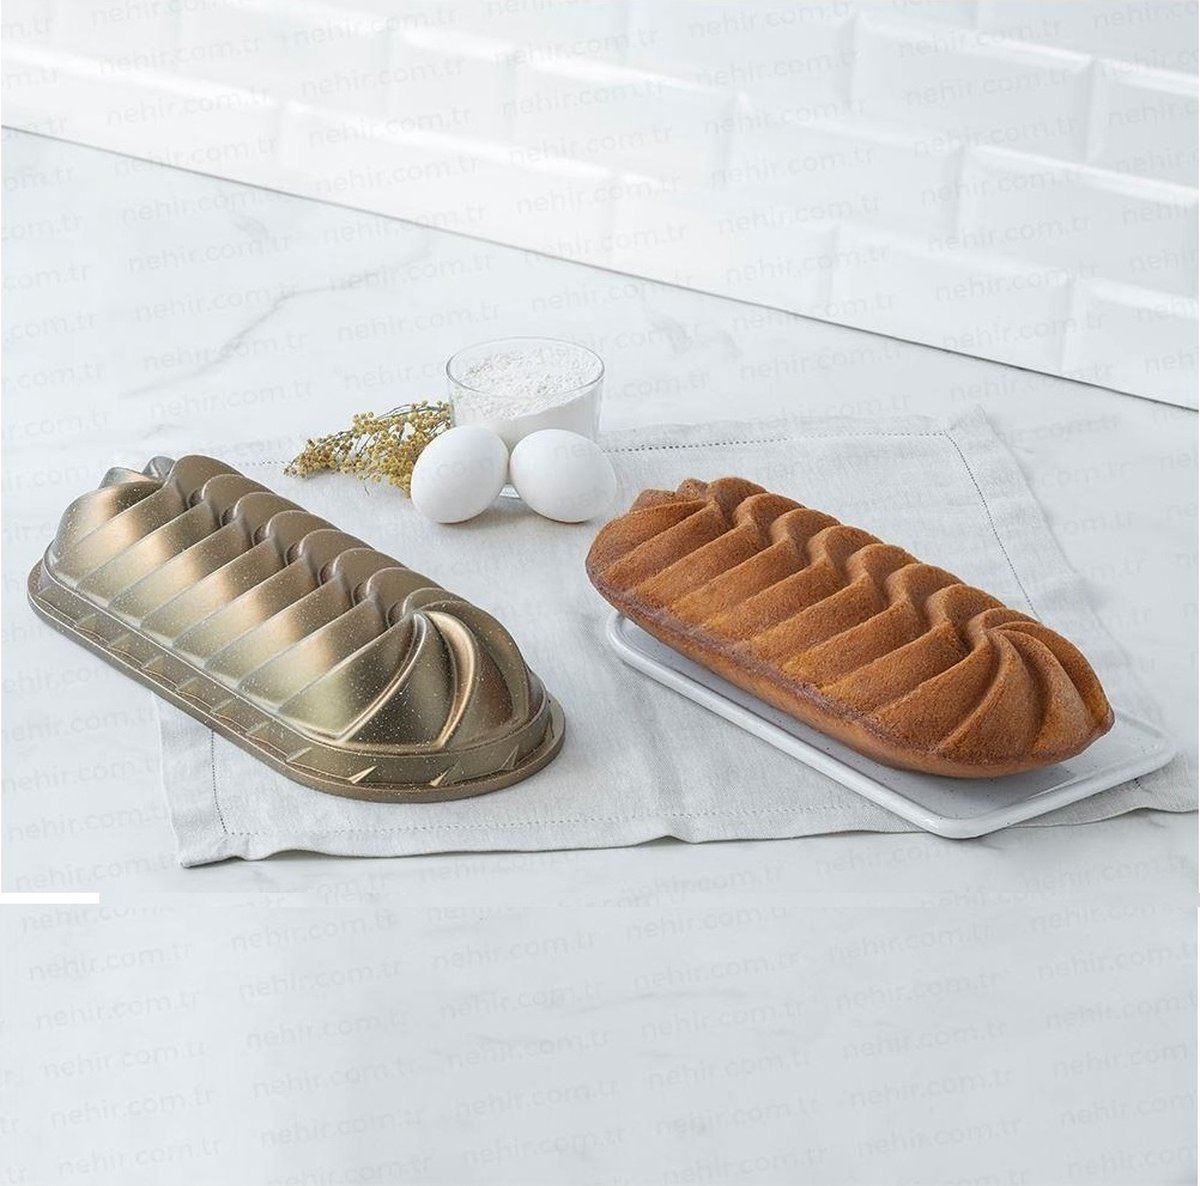 Homestar - Bella Patisse Cakevorm Profi 35 cm - Baton - giet - gold